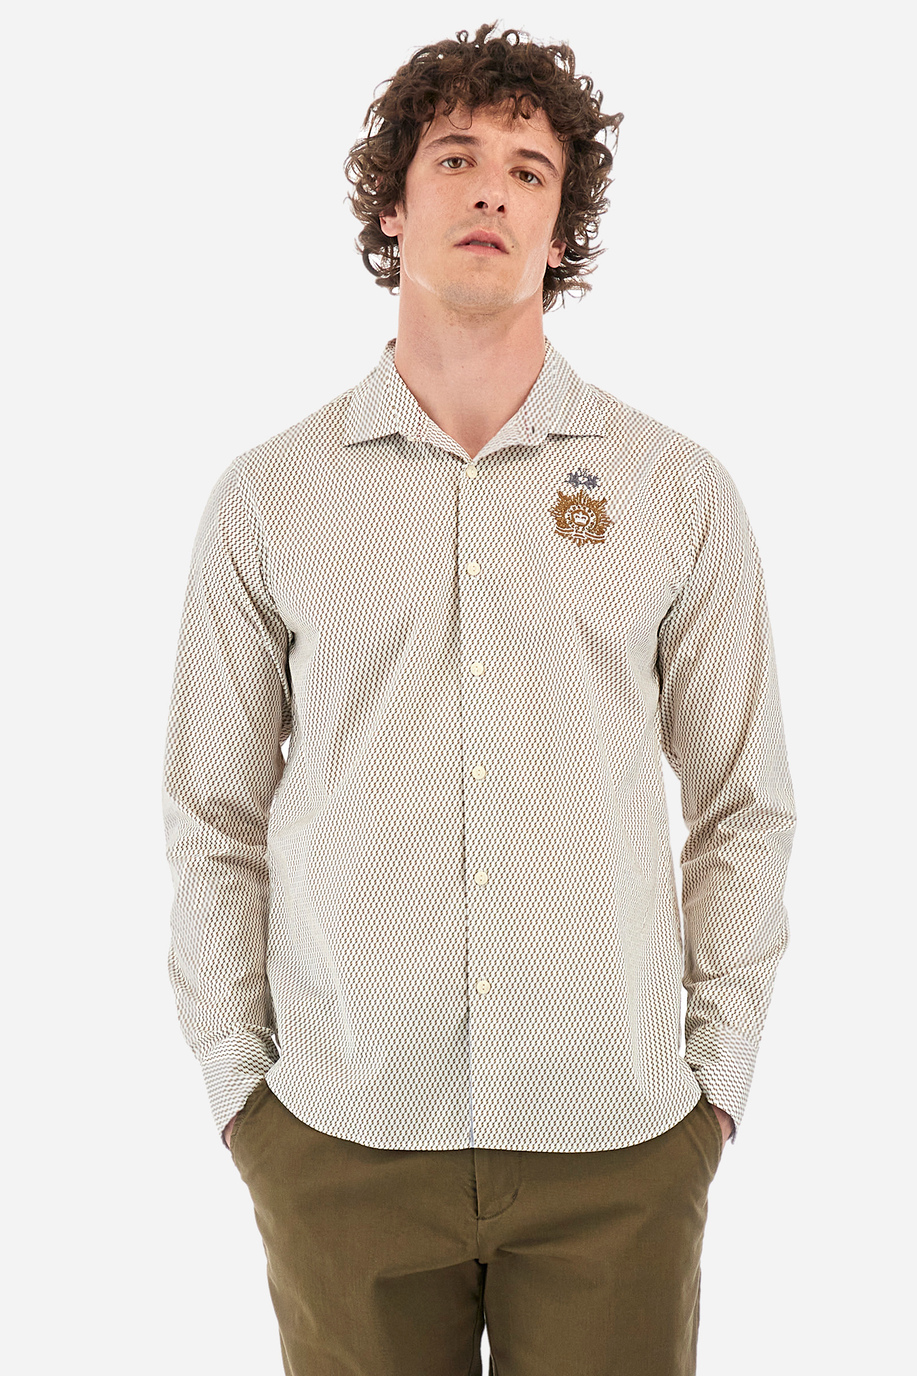 Camicia Guards regular fit in cotone - Innocent - Camicie | La Martina - Official Online Shop